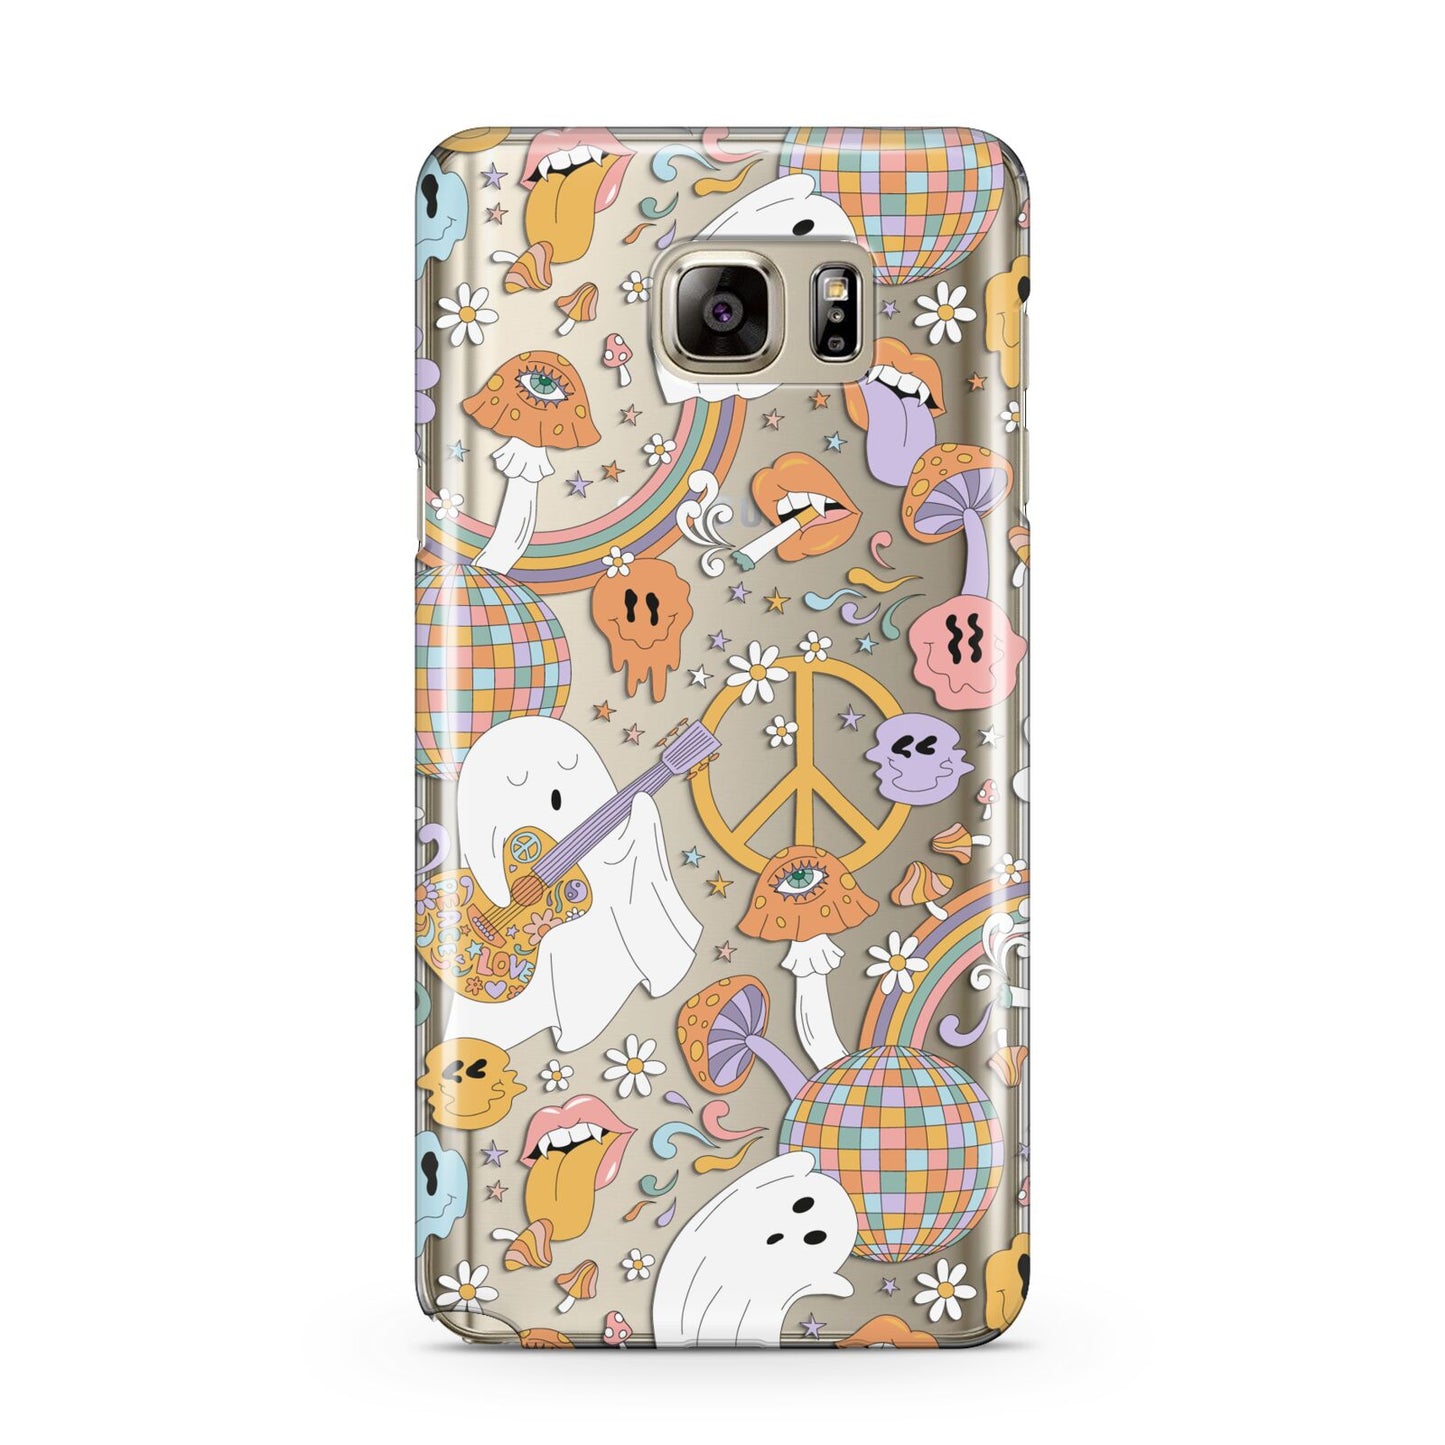 Disco Ghosts Samsung Galaxy Note 5 Case